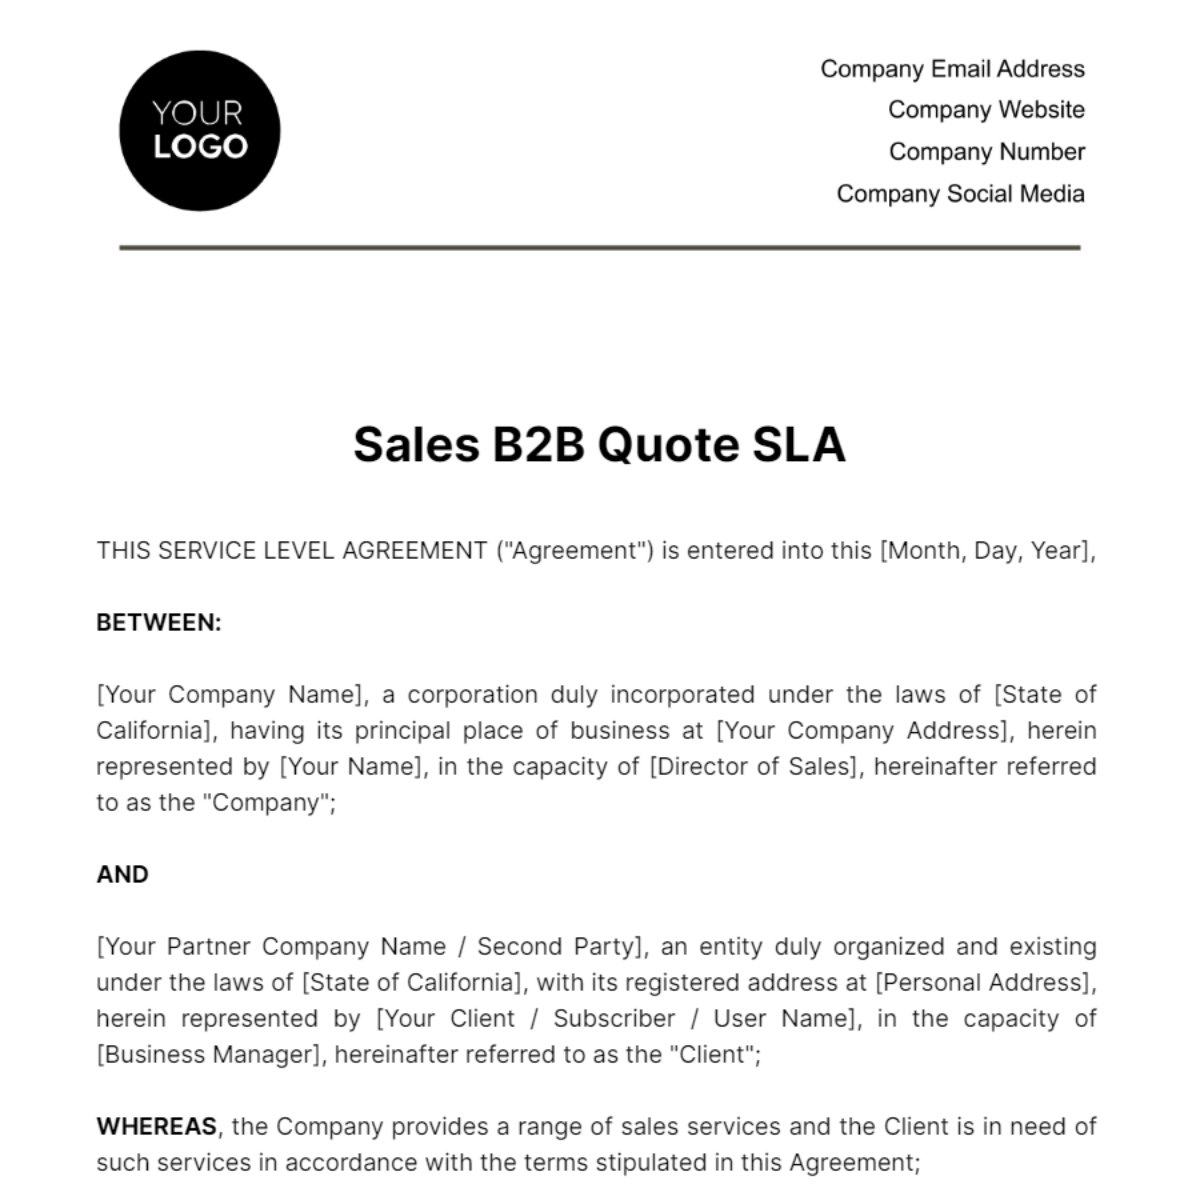 Sales B2B Quote SLA Template